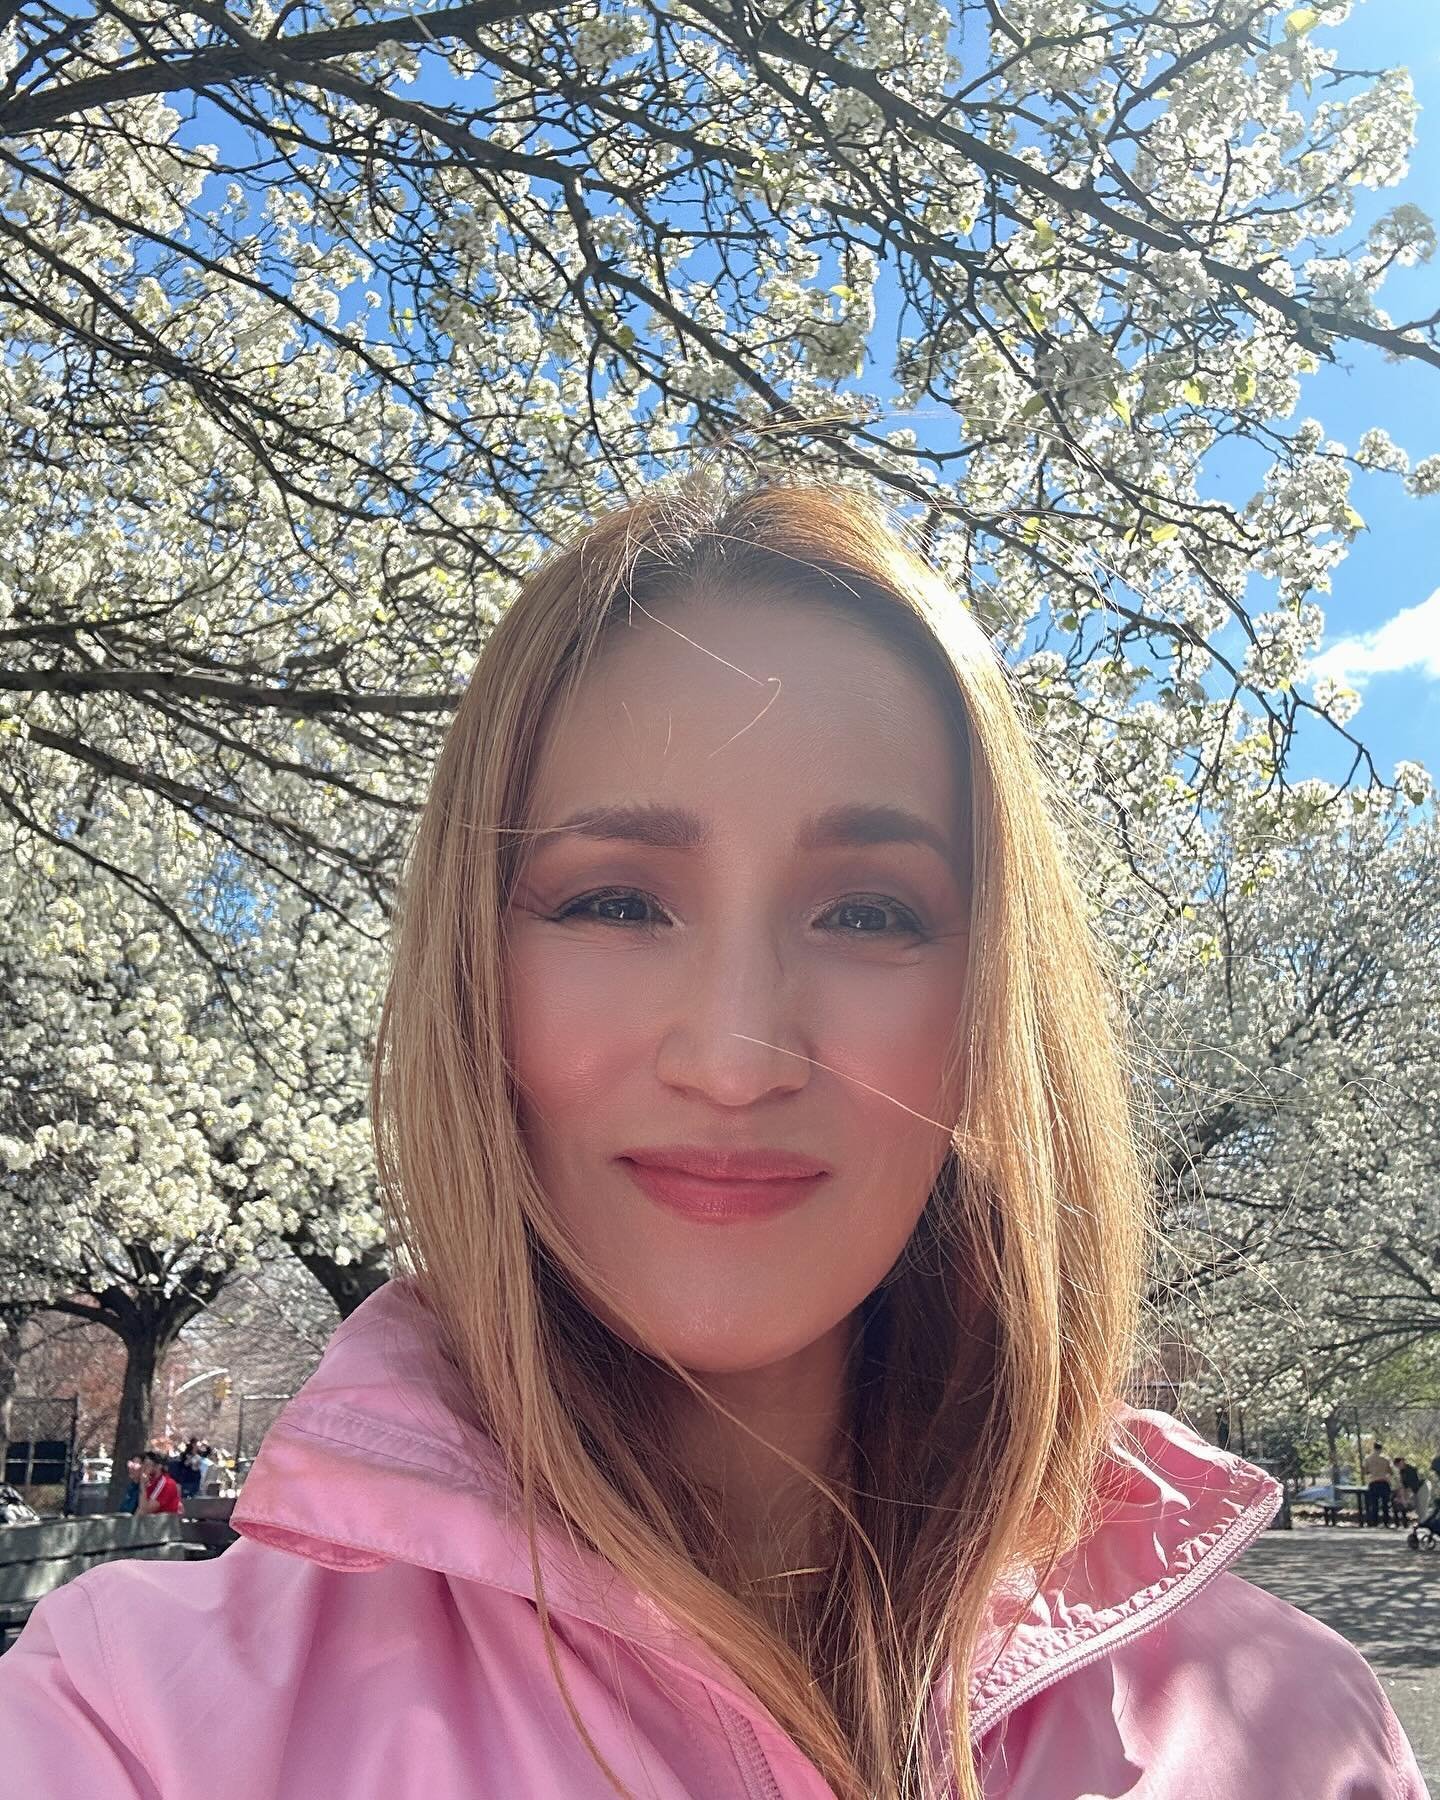 Spring Cherry Blossom stroll 🌸 Nature is an amazing gift... Thank you @rie.nyc for sharing the lovely spring afternoon. X AK

@akakemikakihara
Updates &amp; Releases
https://linktr.ee/akakemikakihara
(Link in Bio)

#happyspring #spring #AK #akakemik